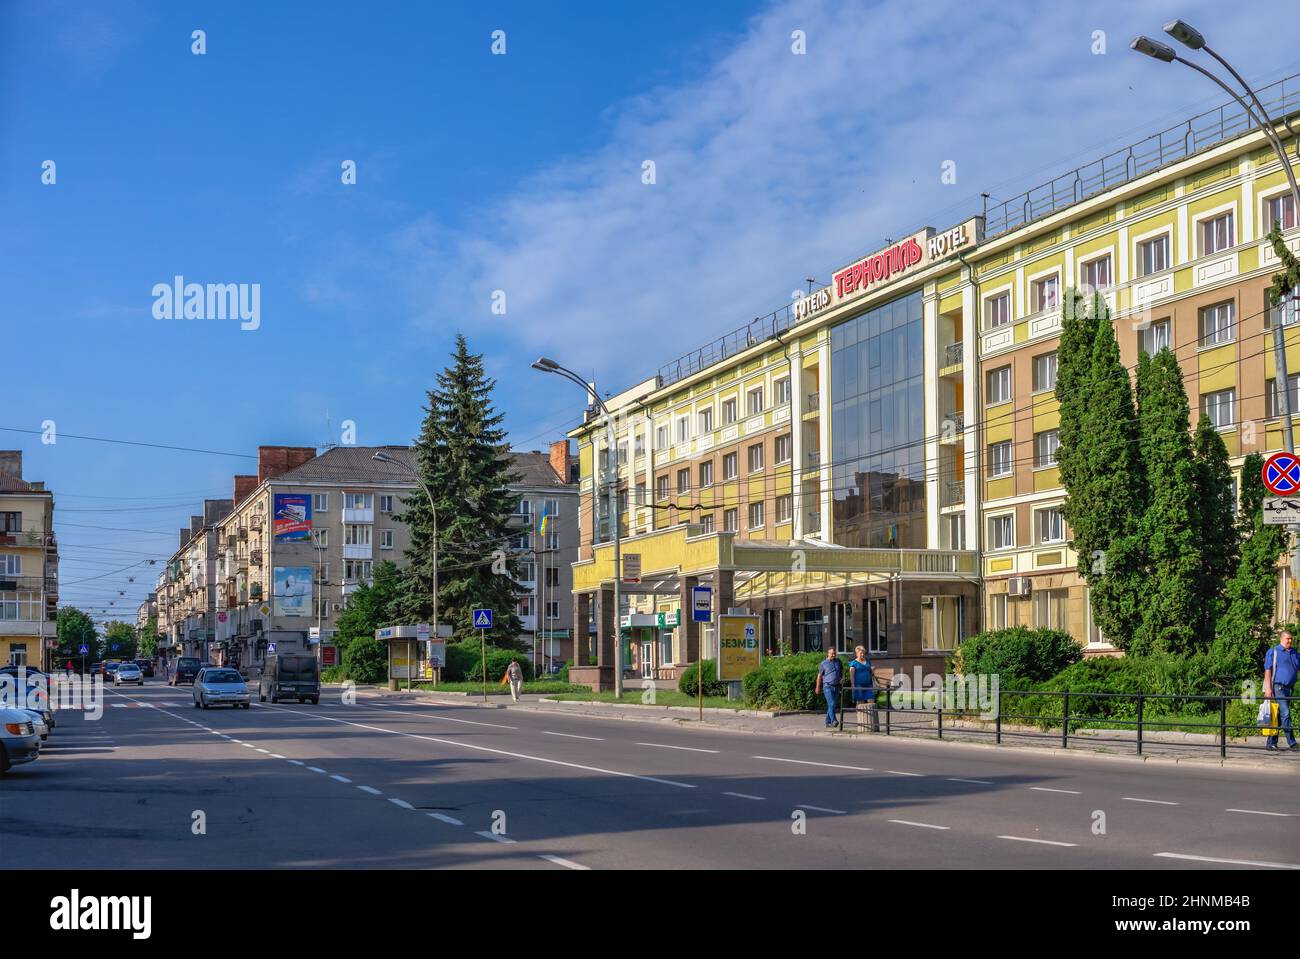 Streets of the historic city center of Ternopil, Ukraine Stock Photo